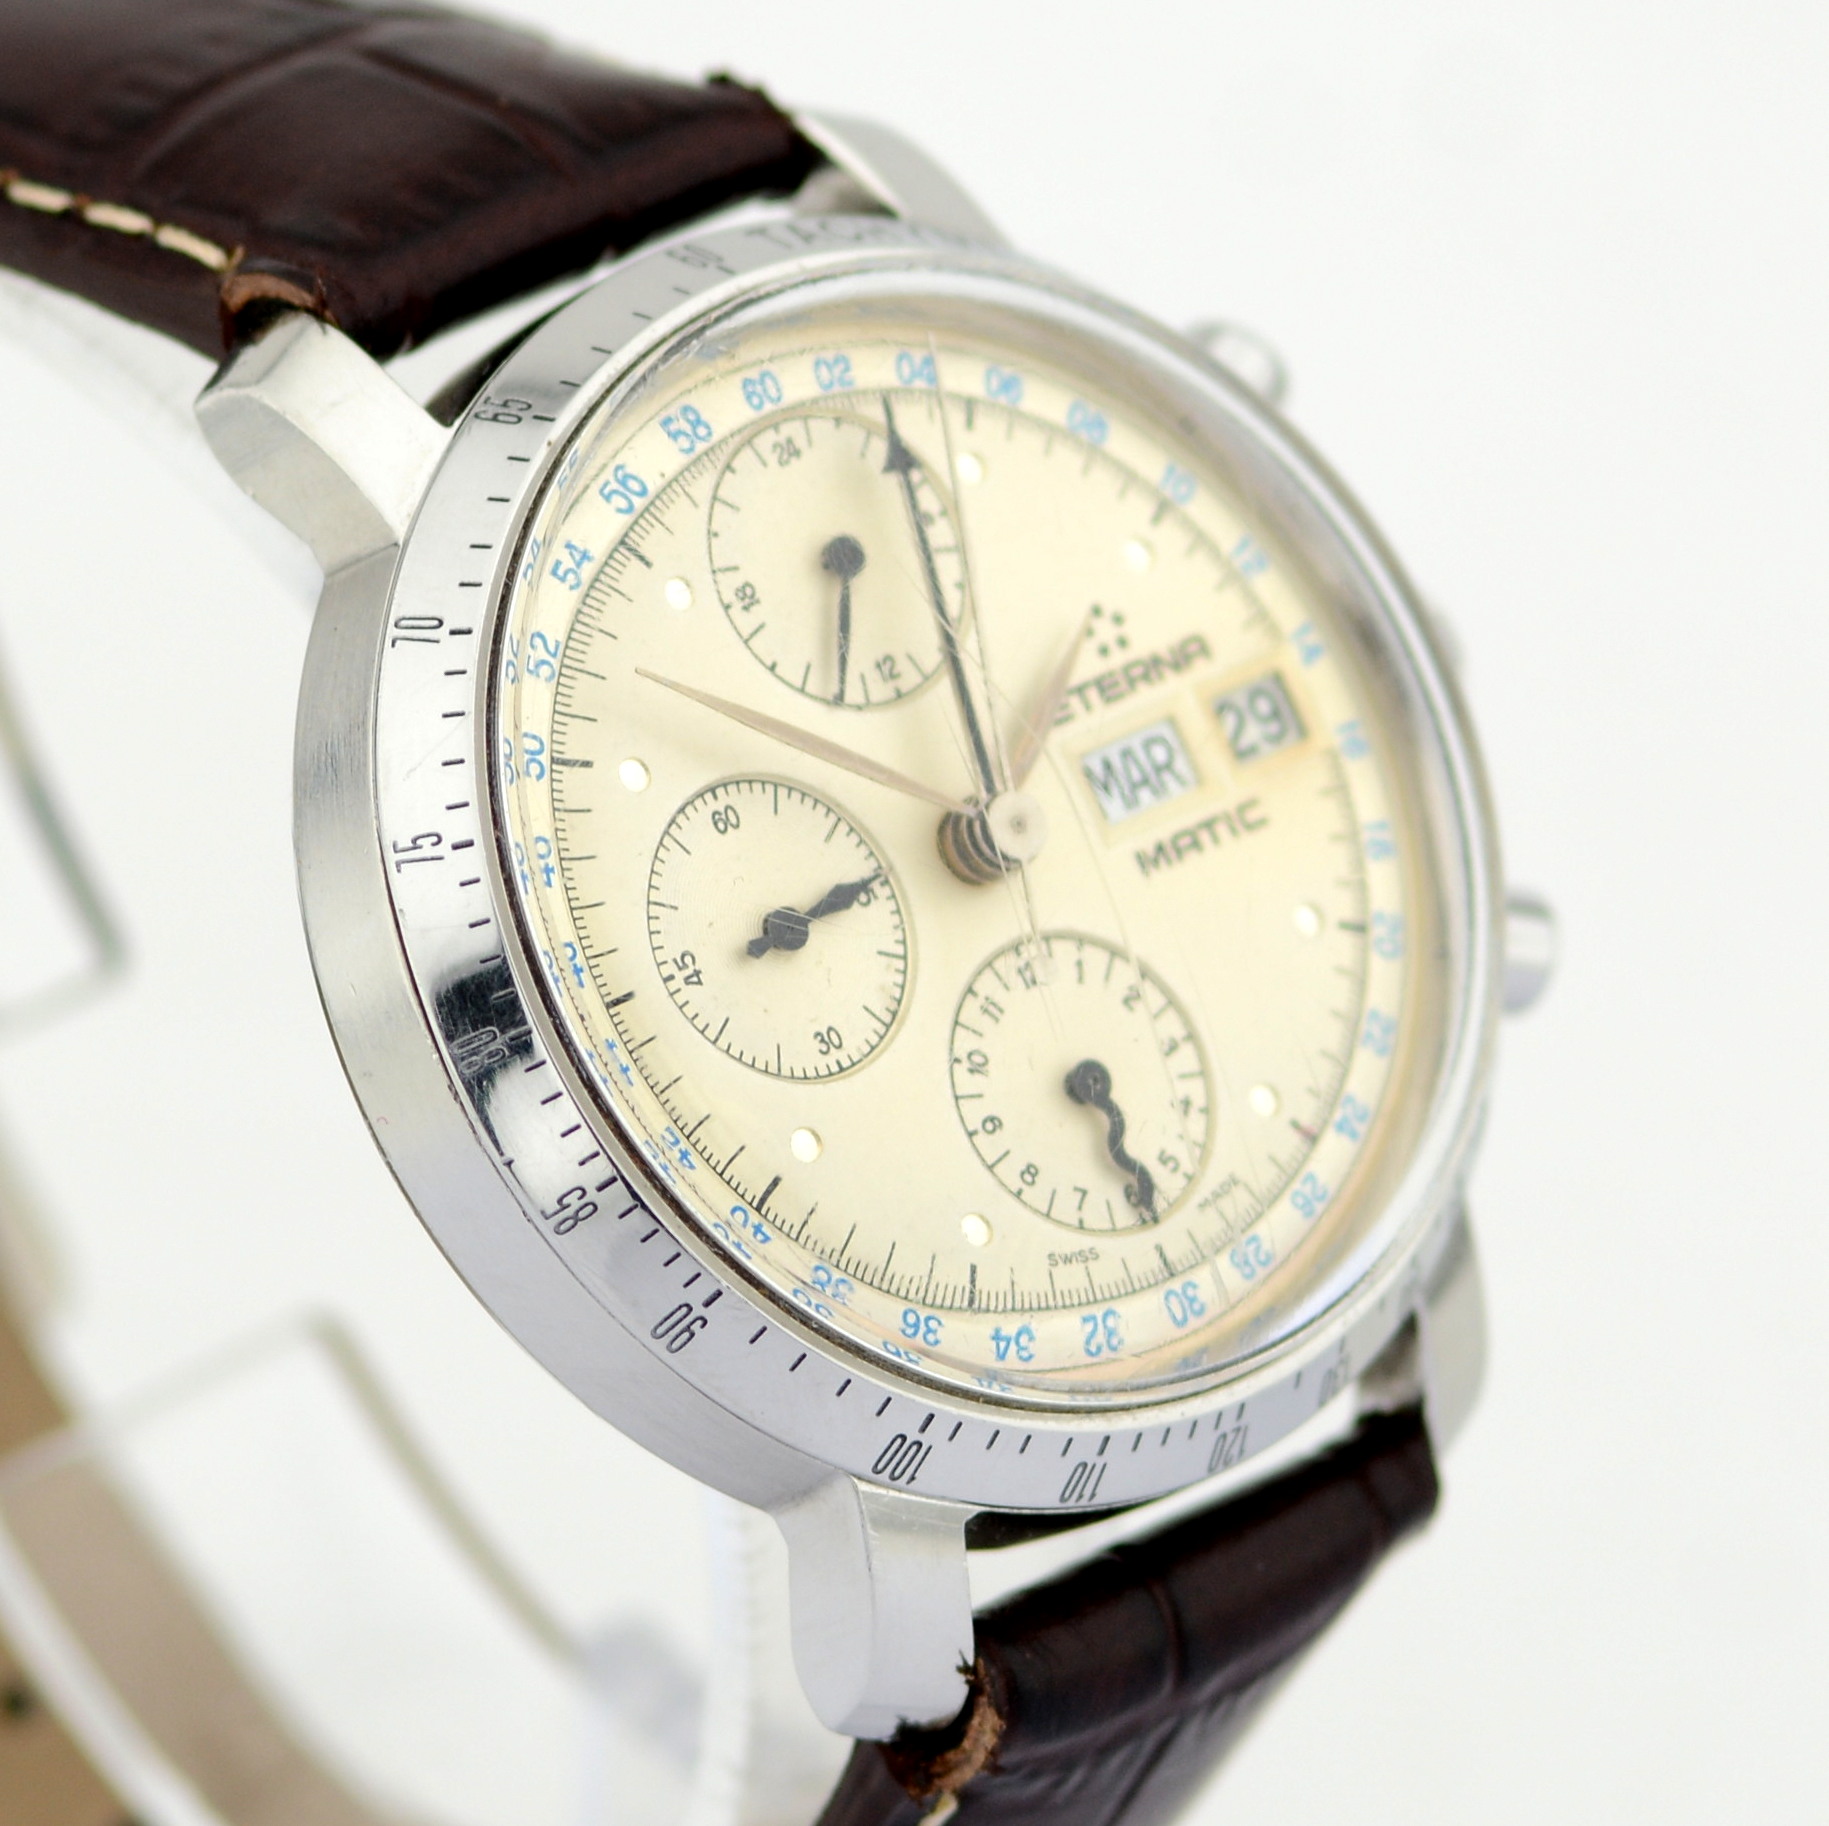 Eterna-Matic / Vintage Chronograph Automatic Day - Date - Gentlmen's Steel Wrist Watch - Image 4 of 11